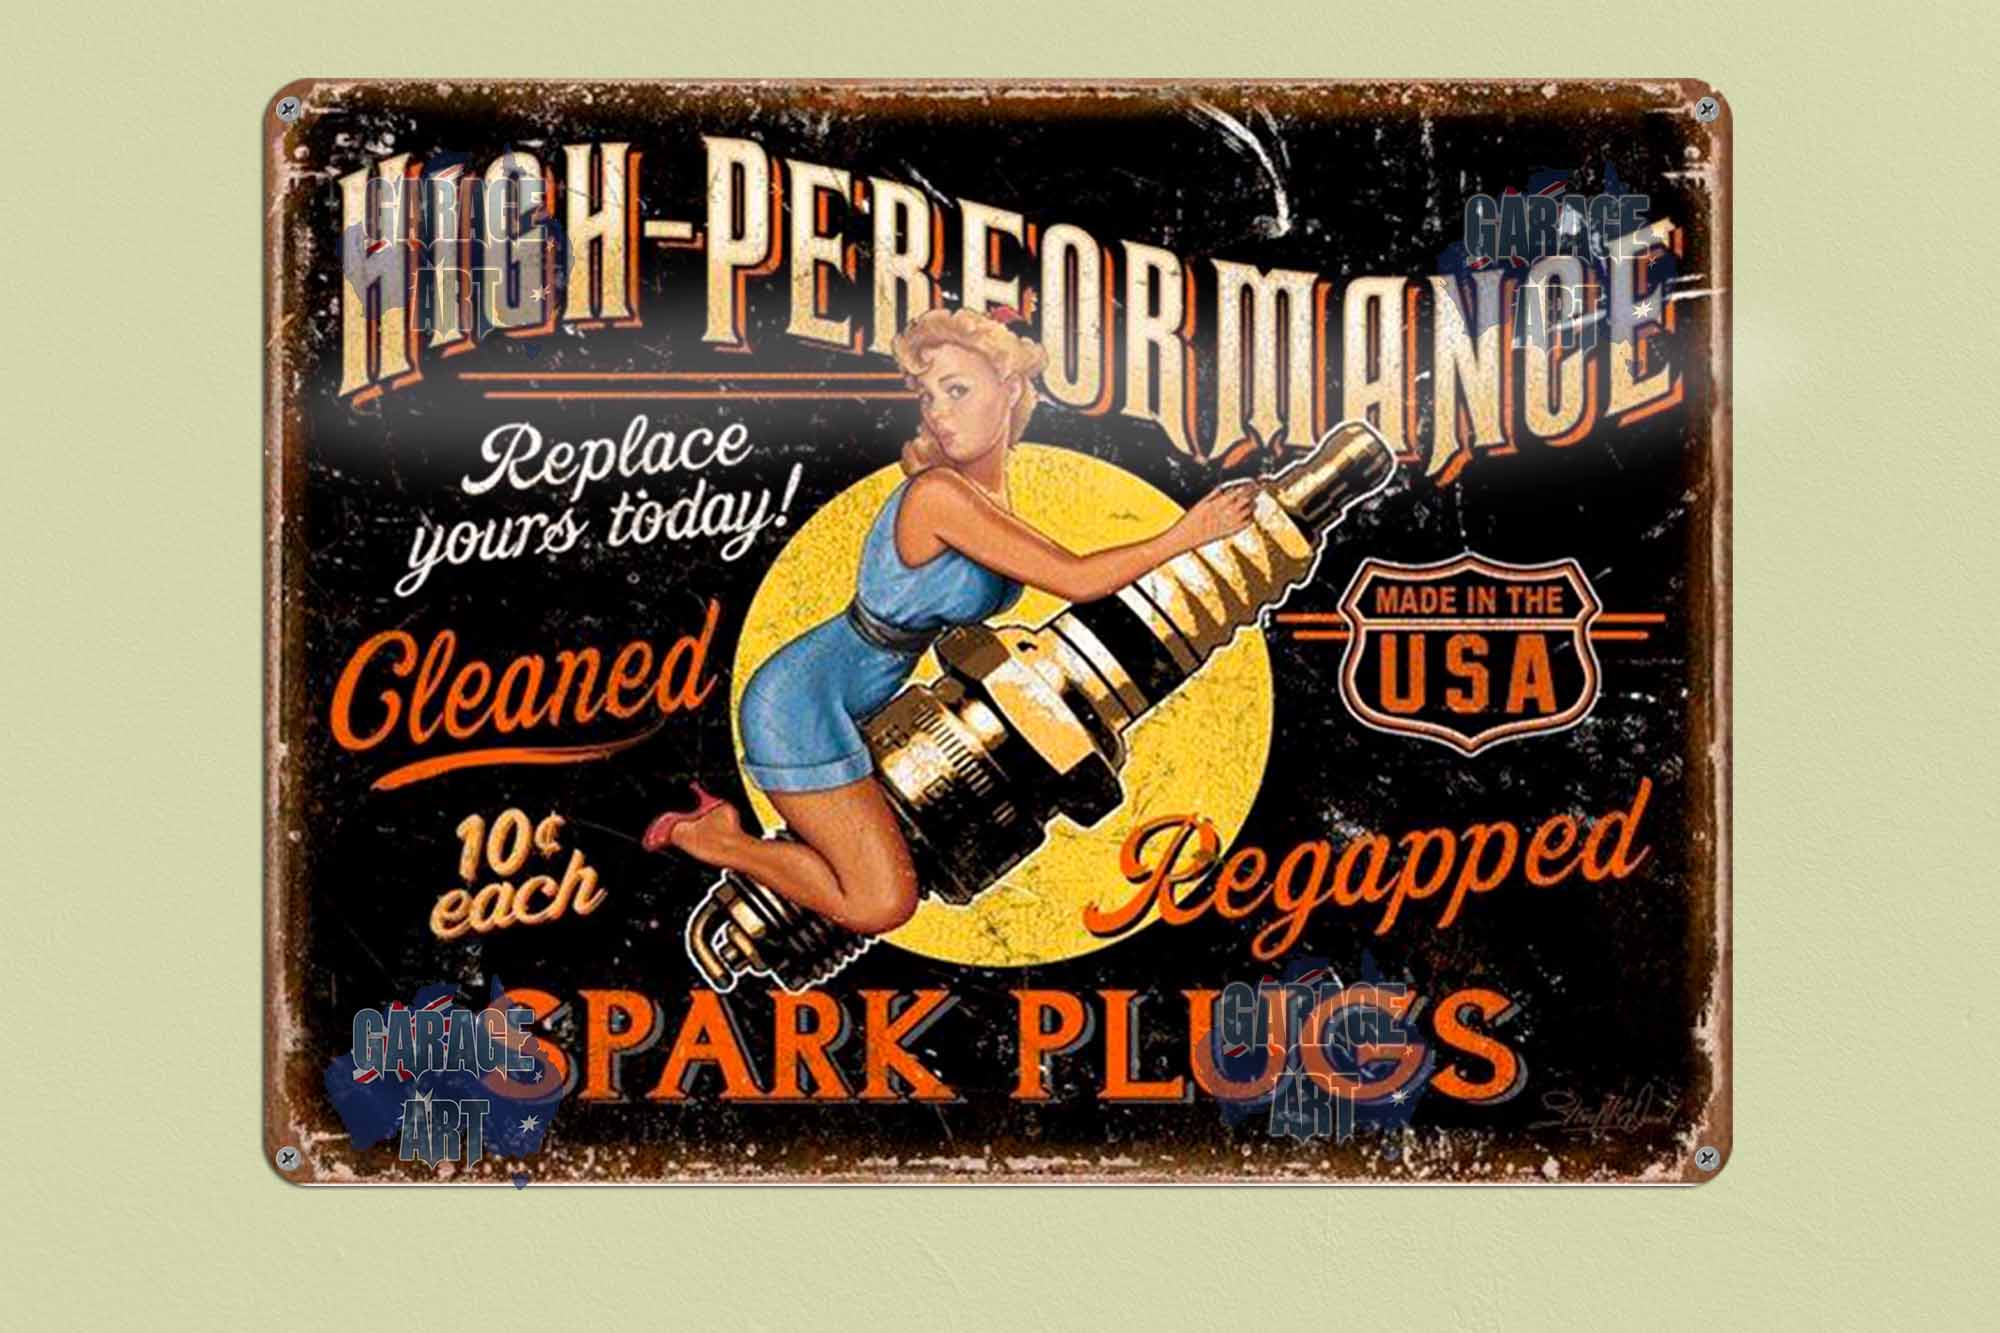 High Performance Spark Plugs Tin Sign freeshipping - garageartaustralia